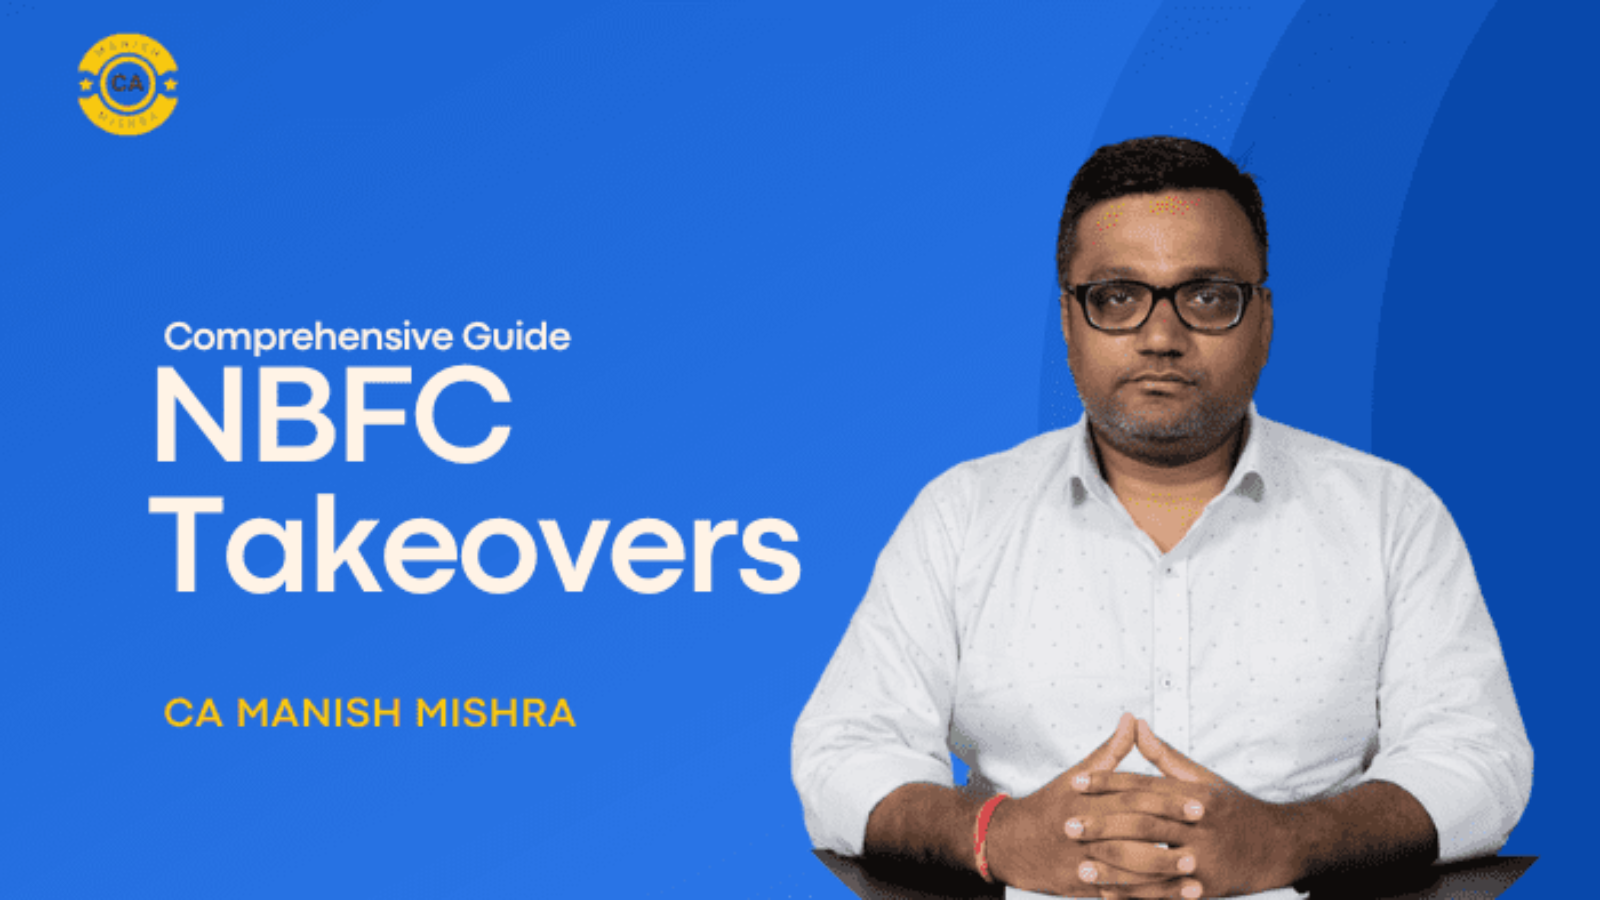 CA Manish Mishra discusses NBFC Takeover Strategies